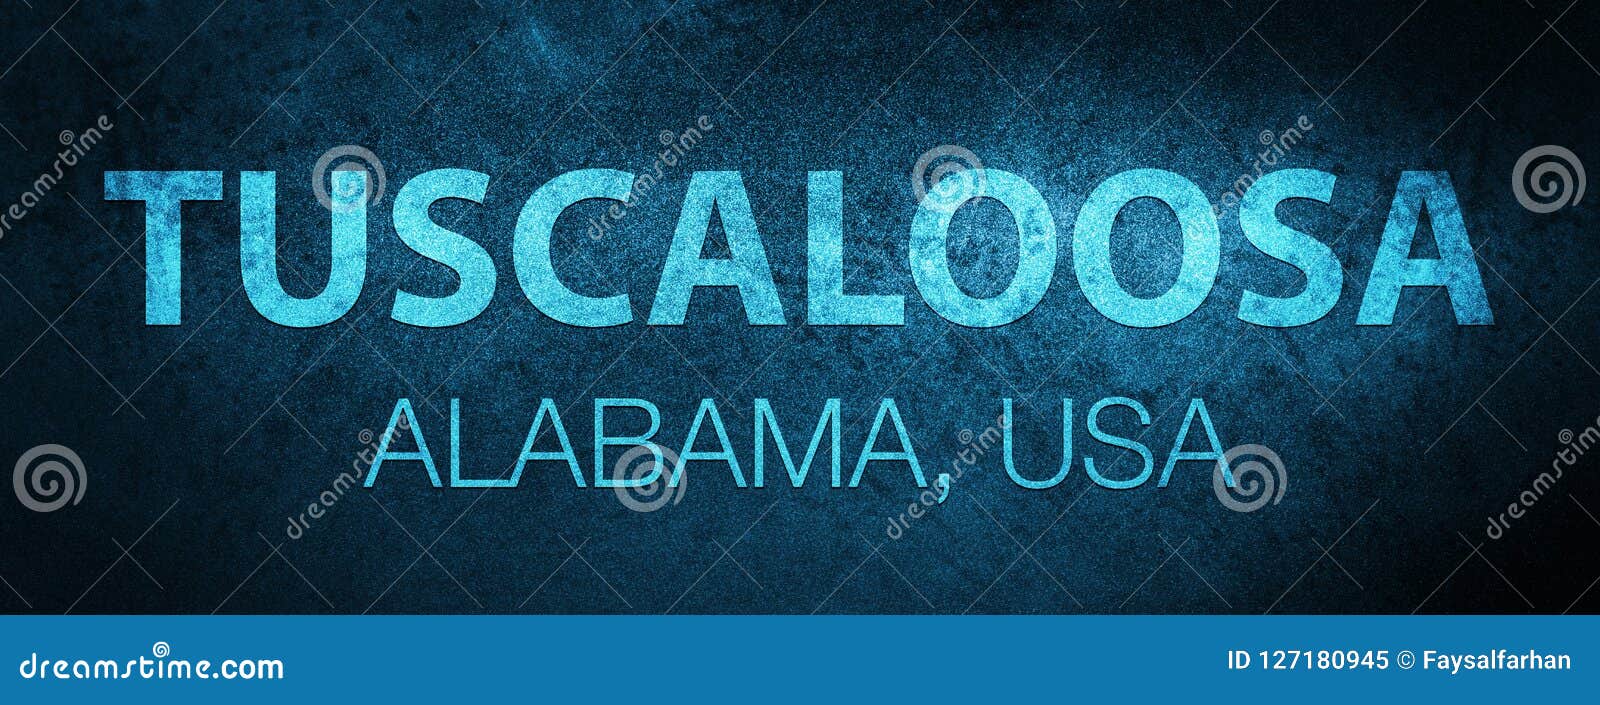 tuscaloosa. alabama. usa special blue banner background